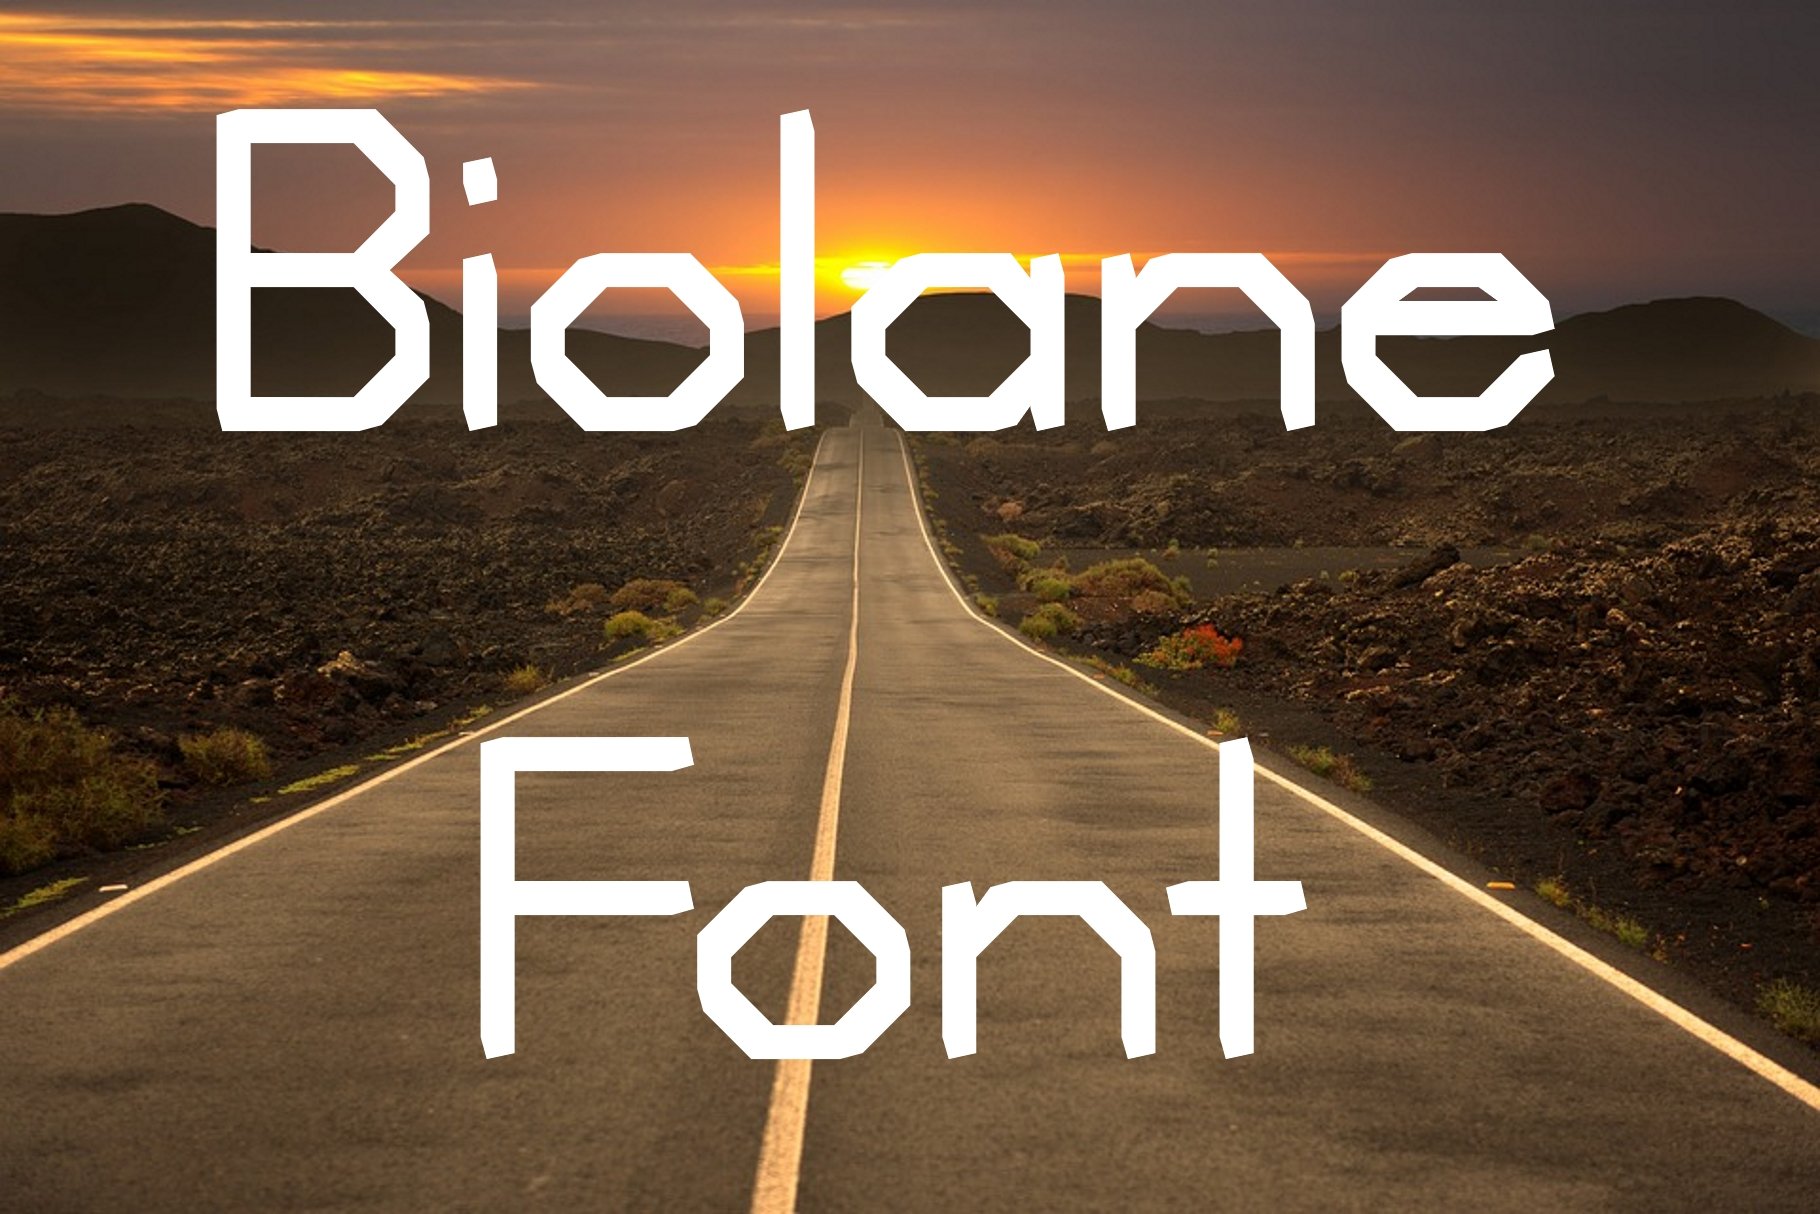 Biolane Font cover image.